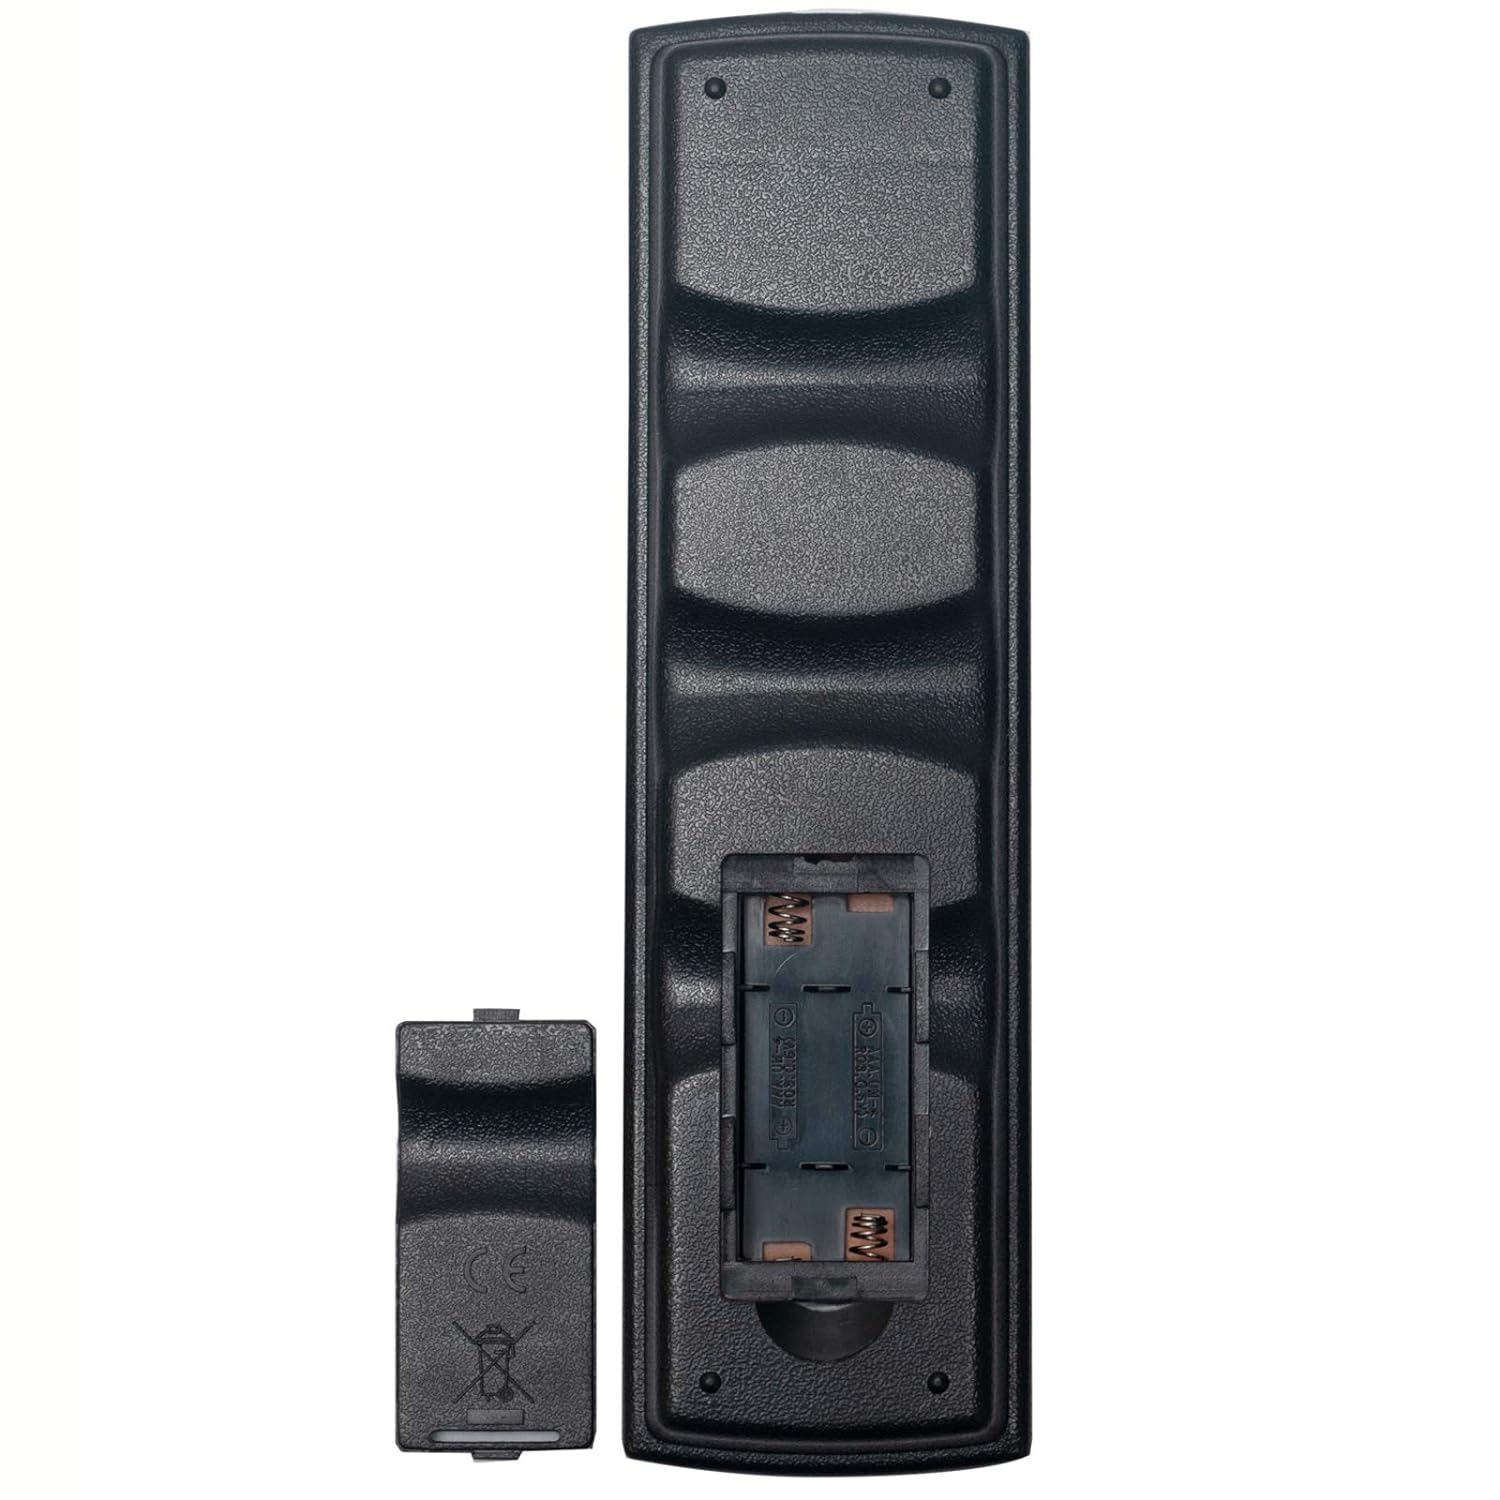 thinkstar Rmt-D255A Remote For Sony Vcr Dvd Recorder Rdrvx535 Rdrvx560 Rdr-Vx535 Rdr-Vx560